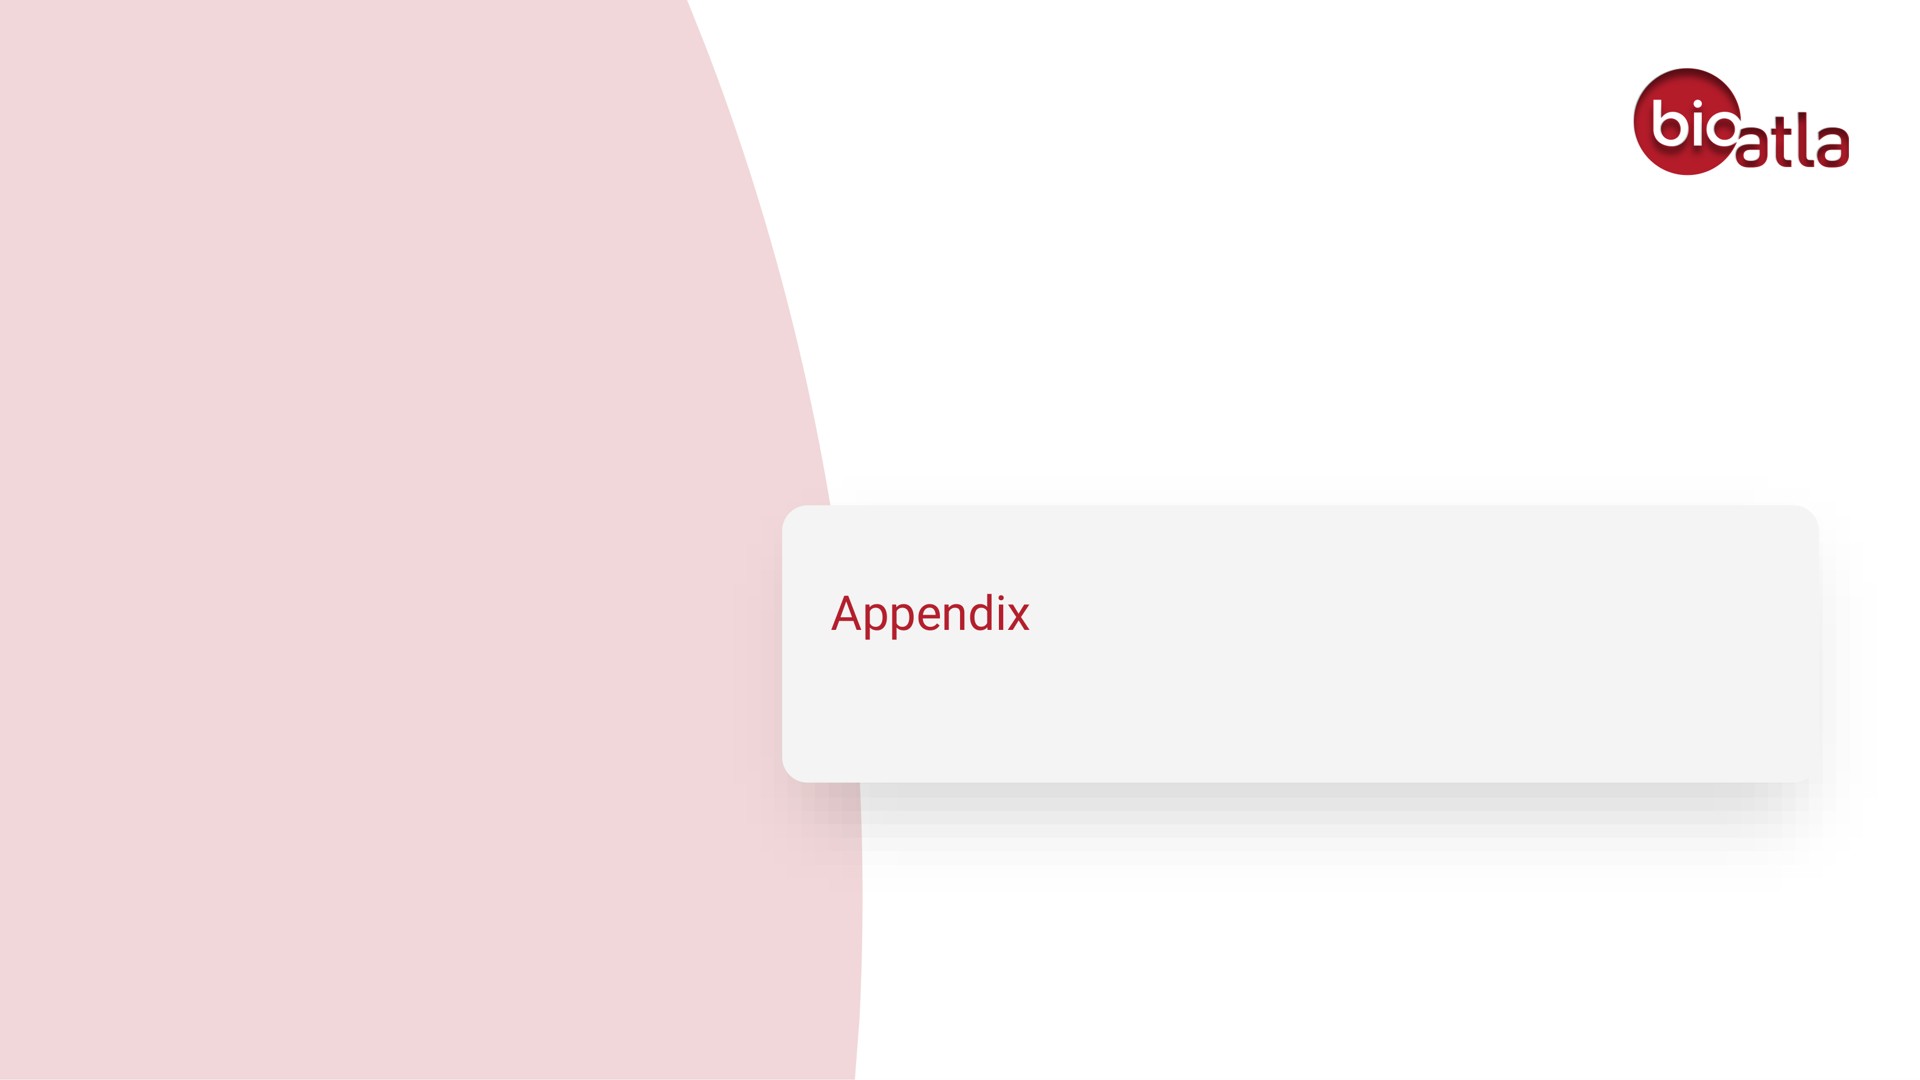 appendix | BioAtla